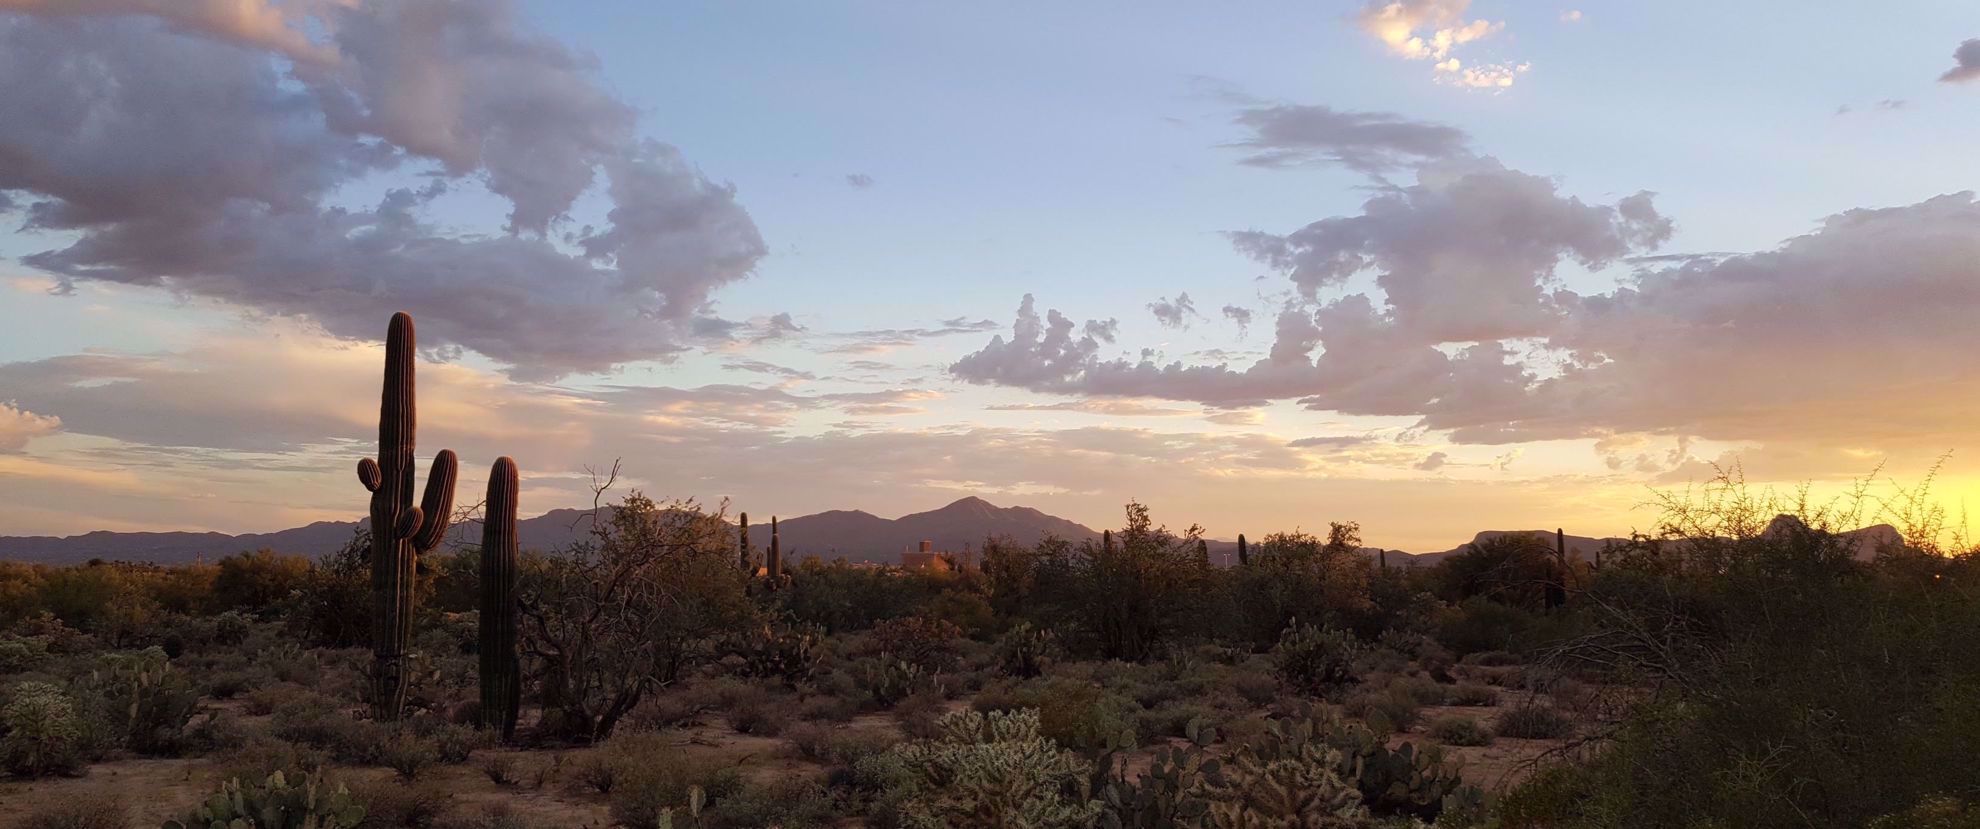 Saguaro cactus in the Sonoran Desert at sunset